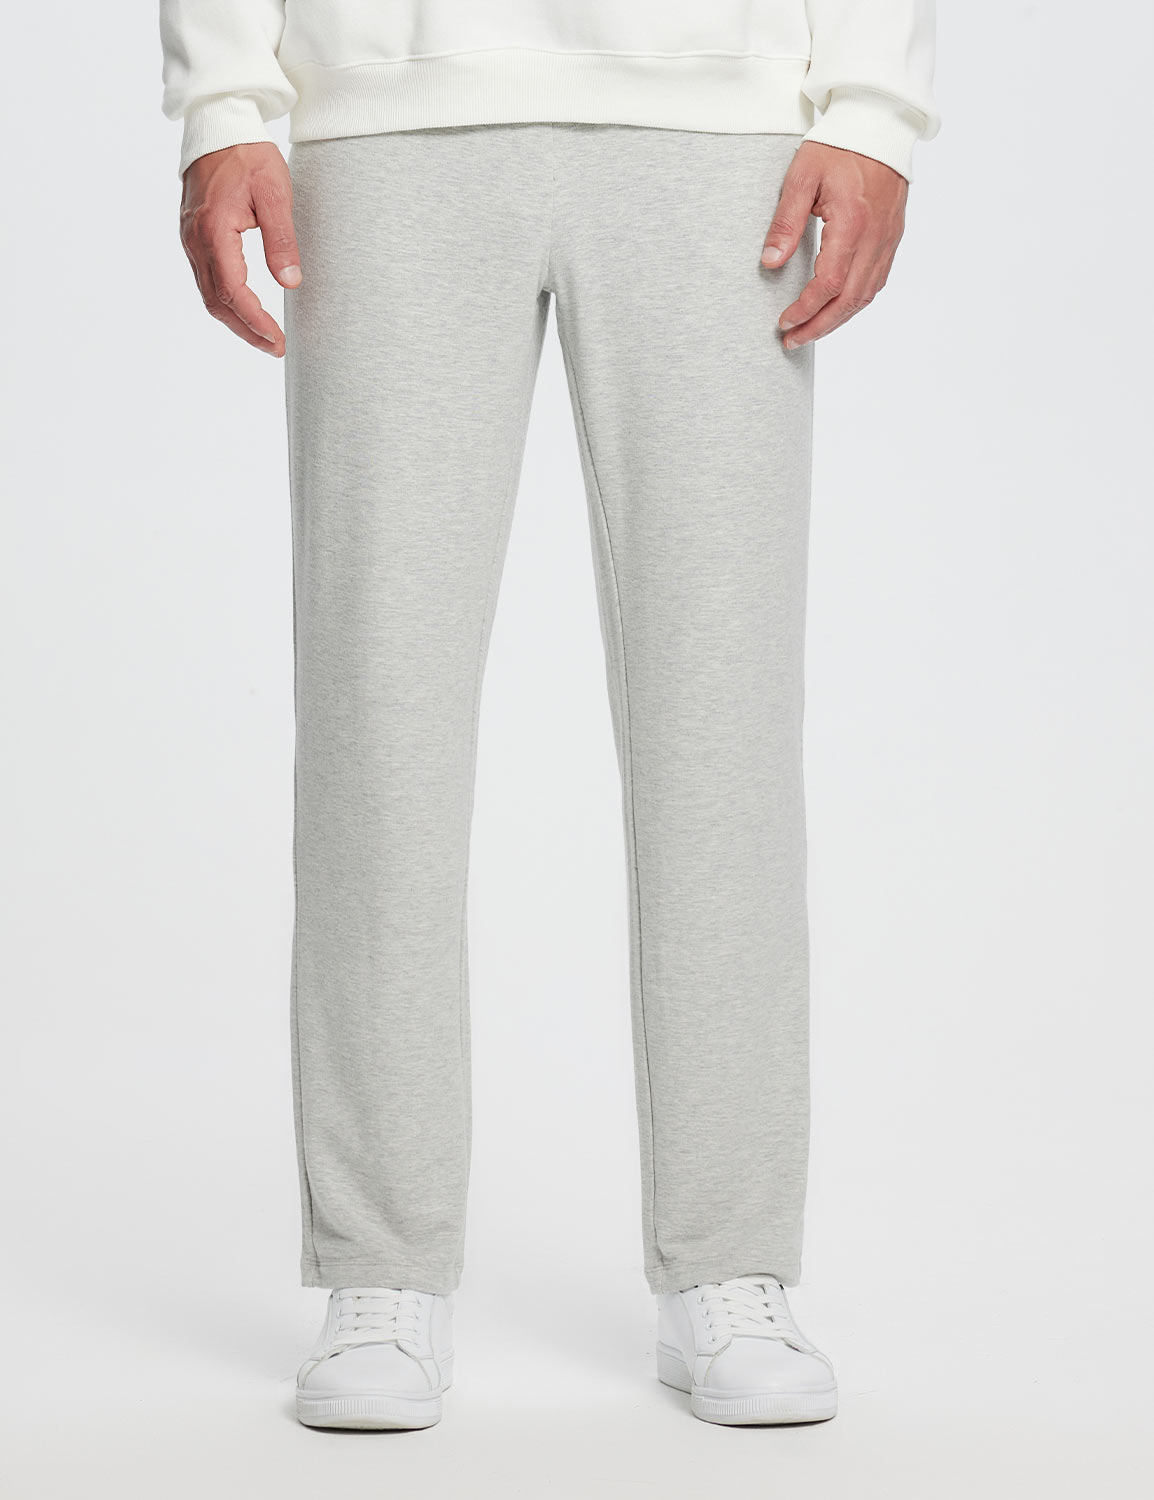 Baleaf Men's Evergreen Modal Sweatpants (Exclusive Website) dbh087 Grey Main